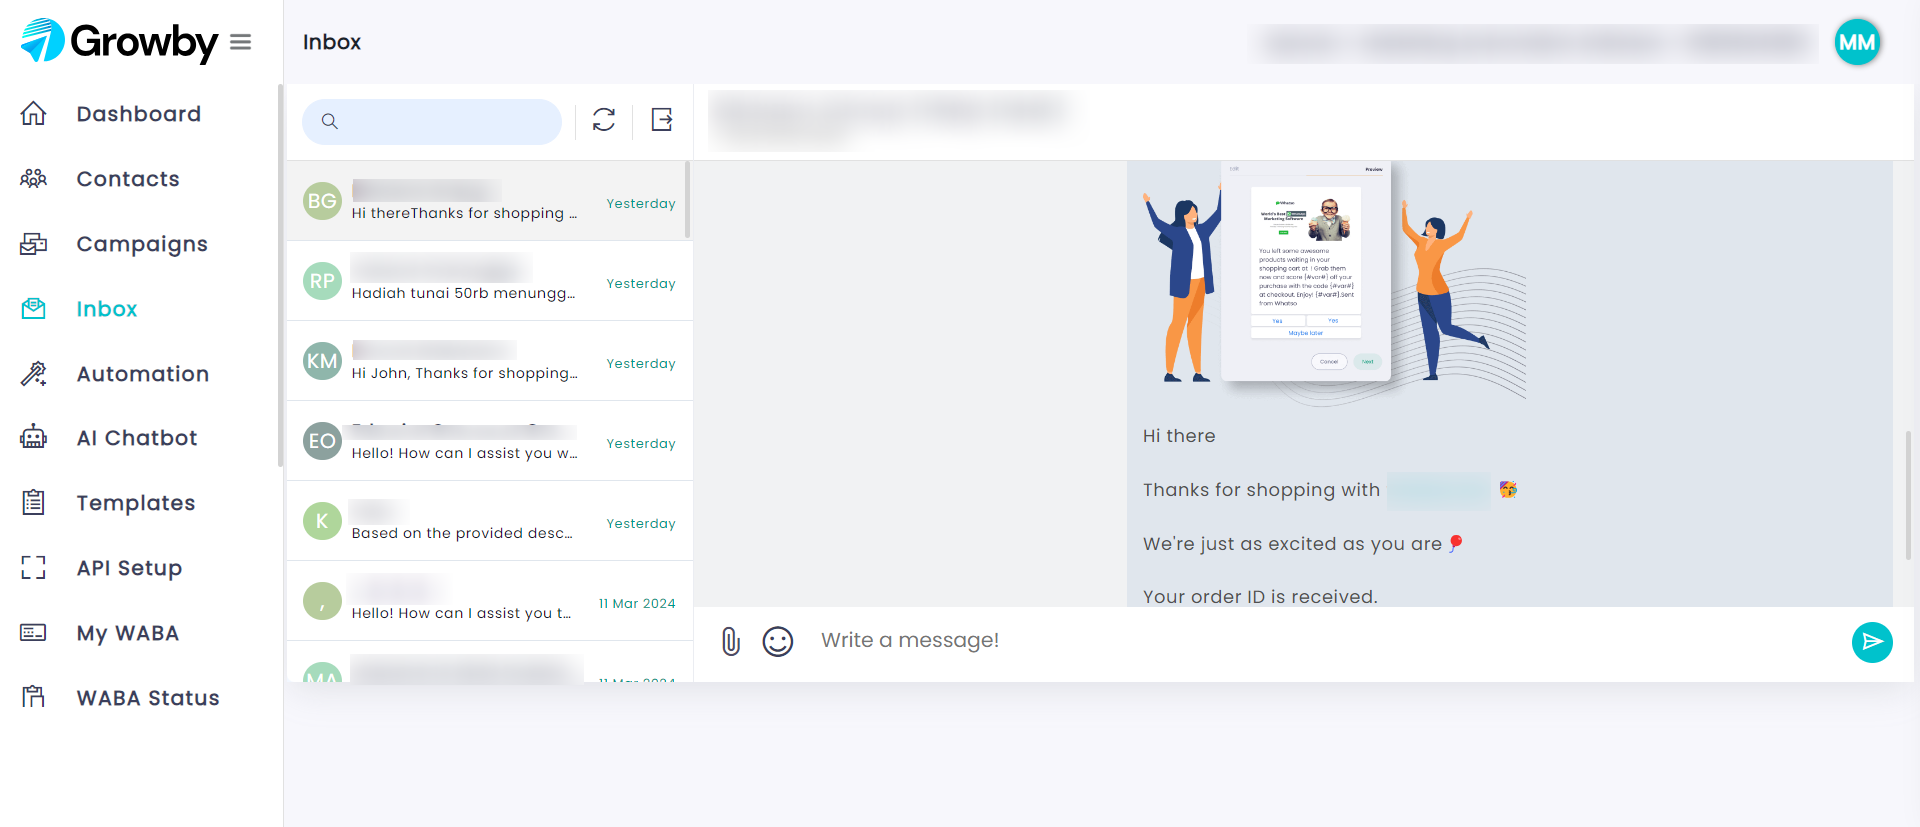 Inbox UI of Growby - WhatsApp Marketing Platform